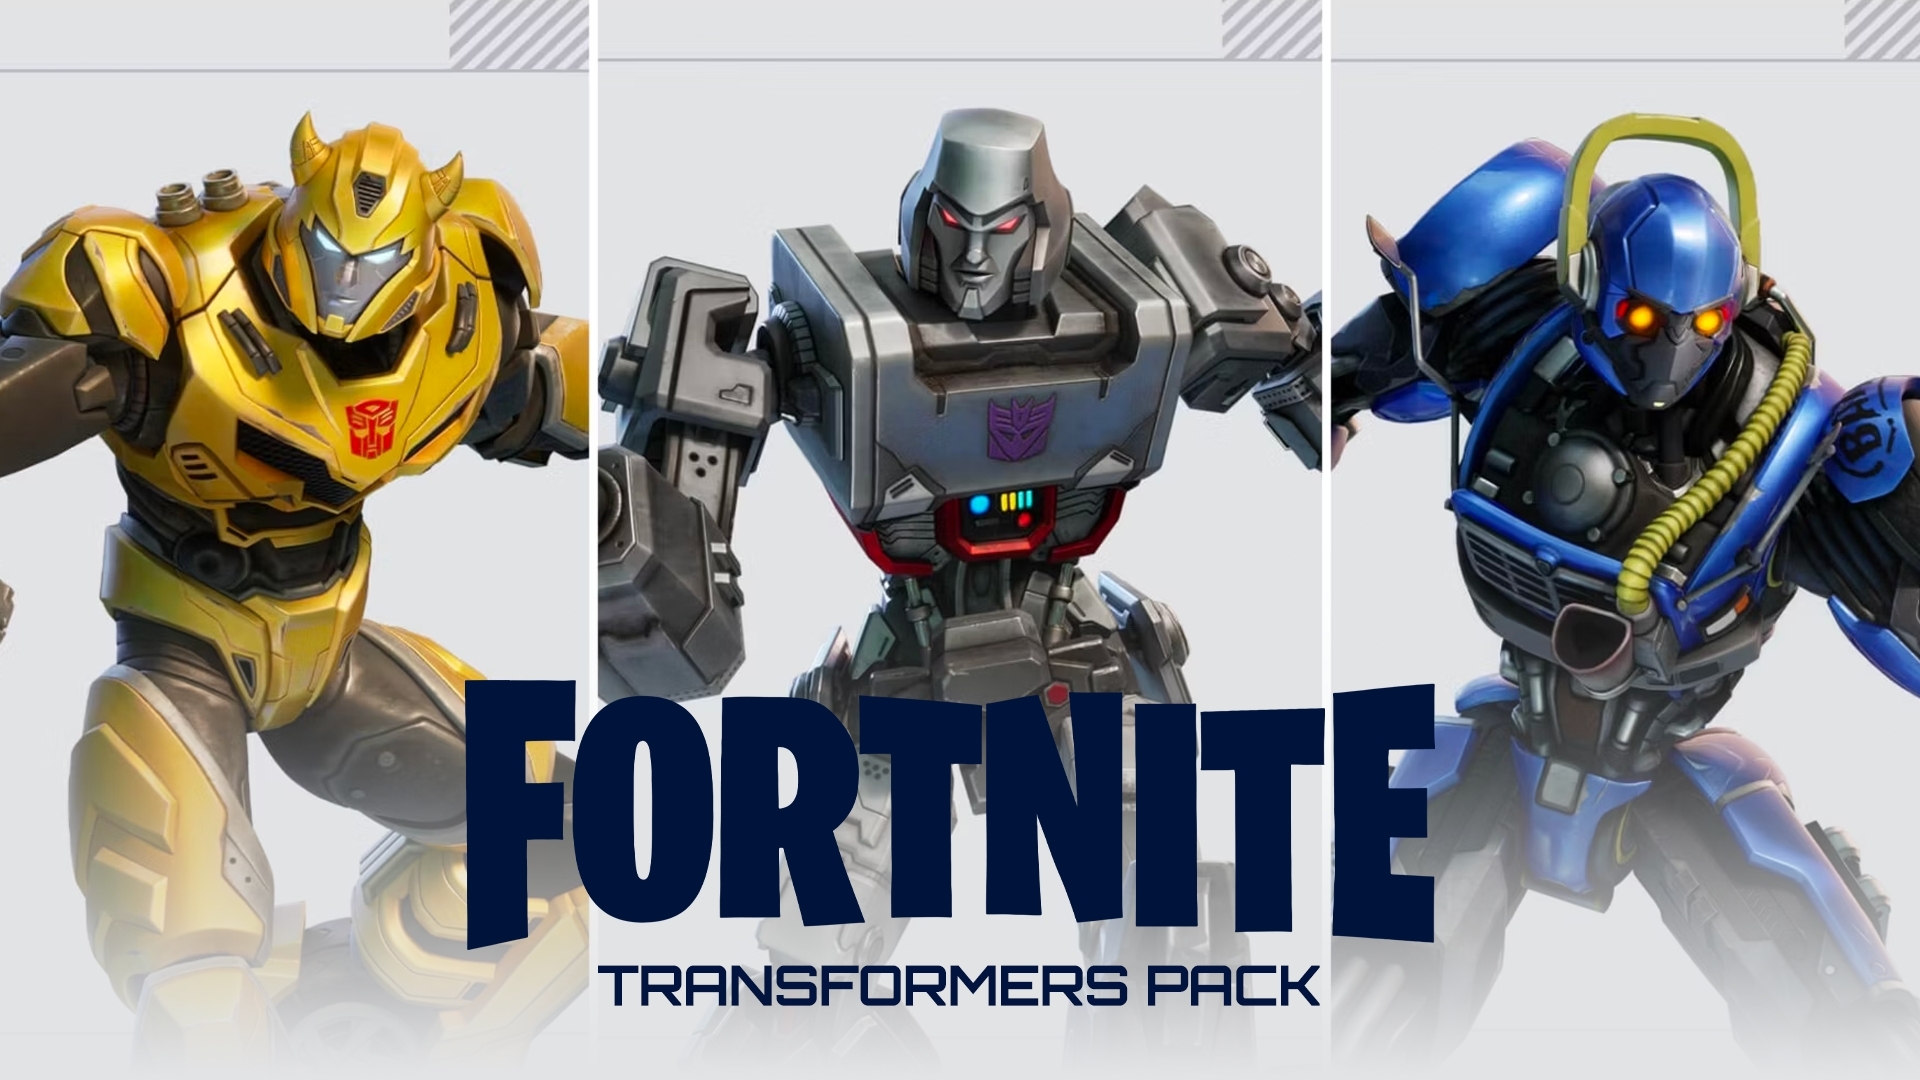 Fortnite Pack Transformers XBOX SERIES X/S/XBOX ONE - 1000 V-Bucks inclus !  - Jeux Xbox Series - LDLC